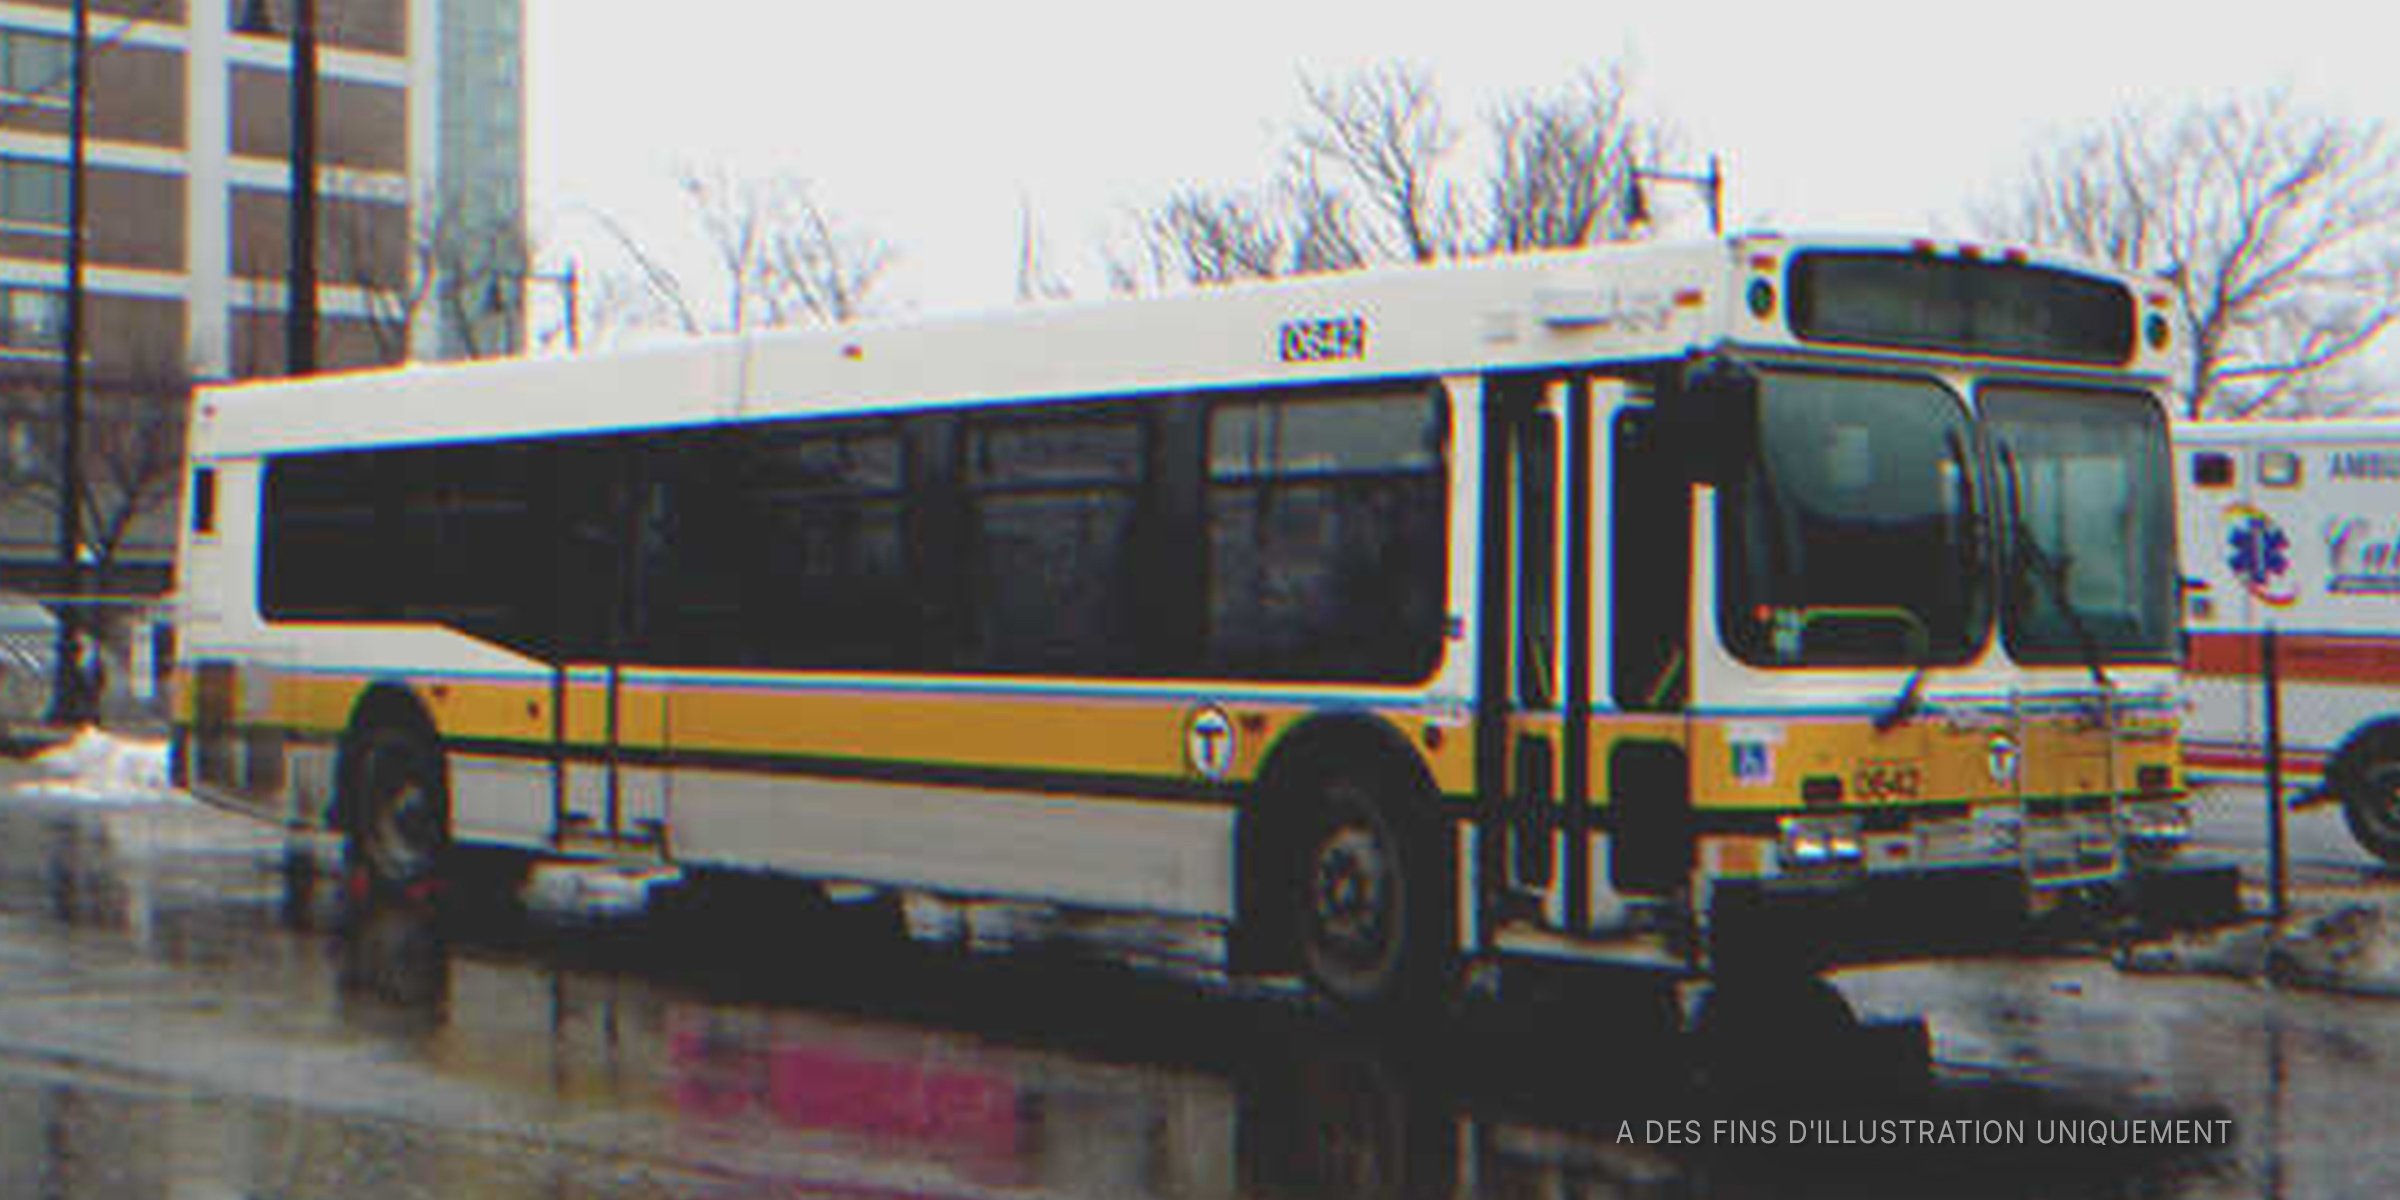 Un bus | Source : Flickr / JLaw45 (CC BY 2.0)